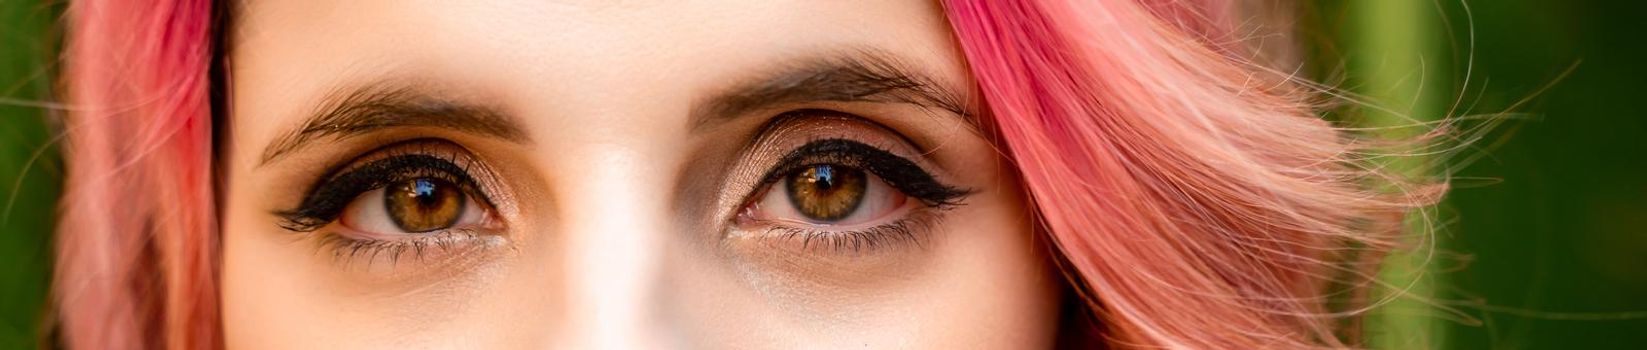 Macro shot of woman's eye with transparent makeup. Expressive look. sight